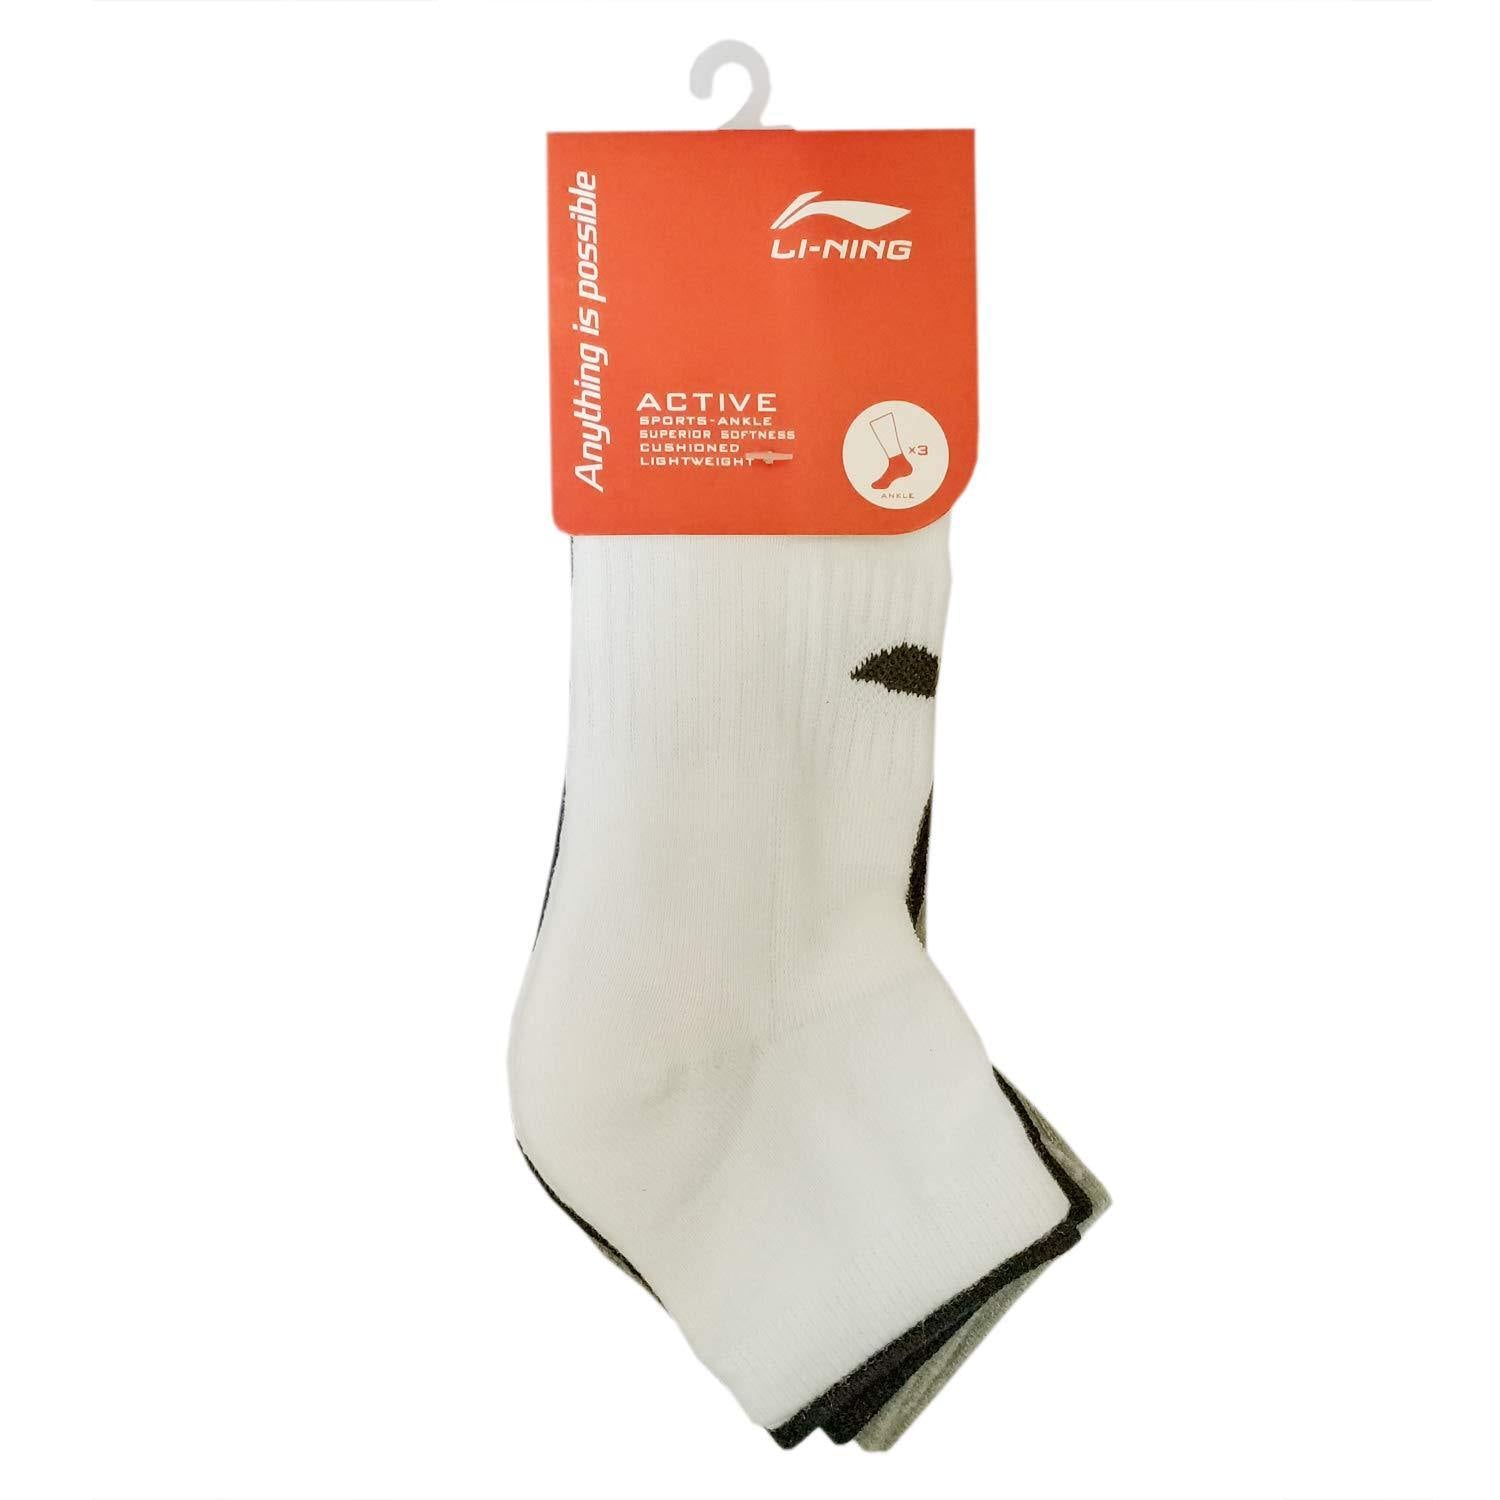 Li-Ning Cotton Men's Sports Socks, Quarter length, Pack of 3, Blk-Wht-Gry - Best Price online Prokicksports.com